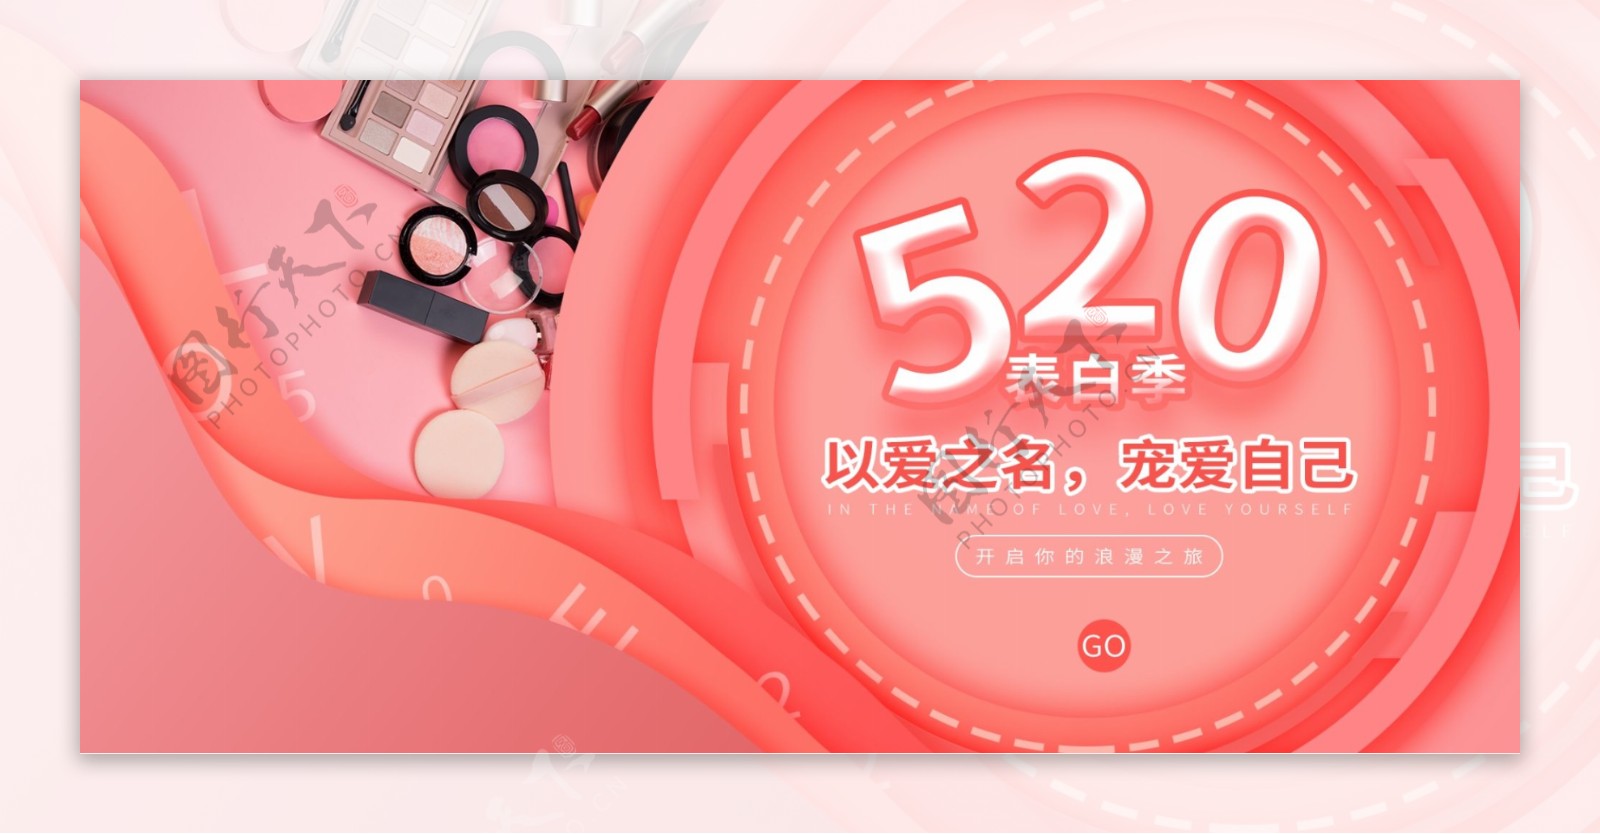 520表白季海报banner